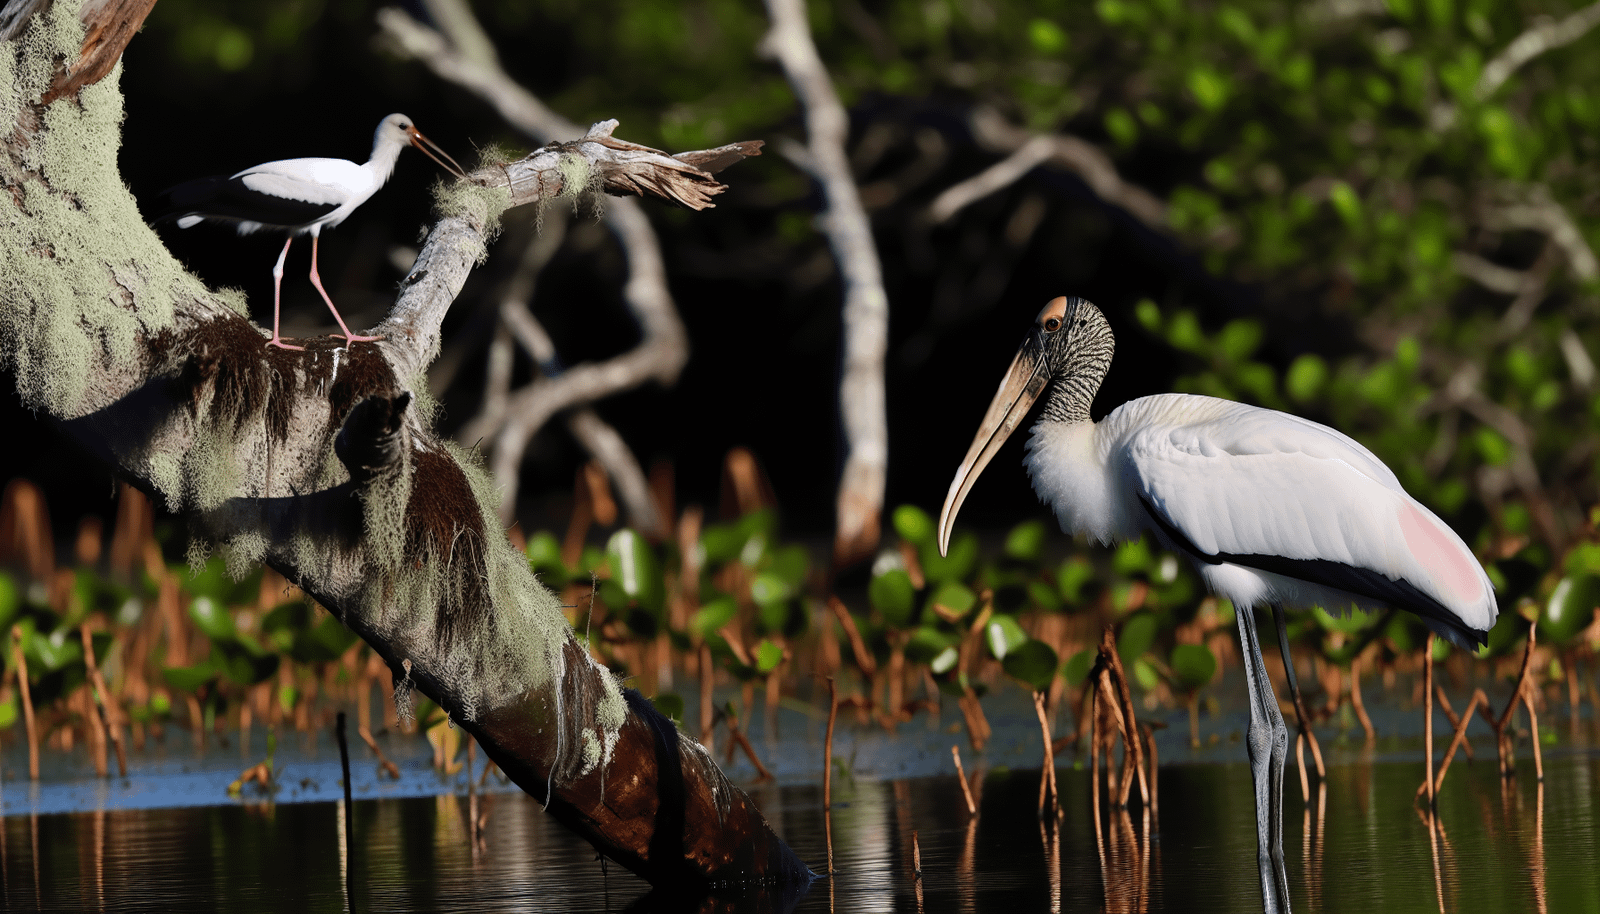 Photo of Wood Stork and Everglade Snail Kite in wetland habitat